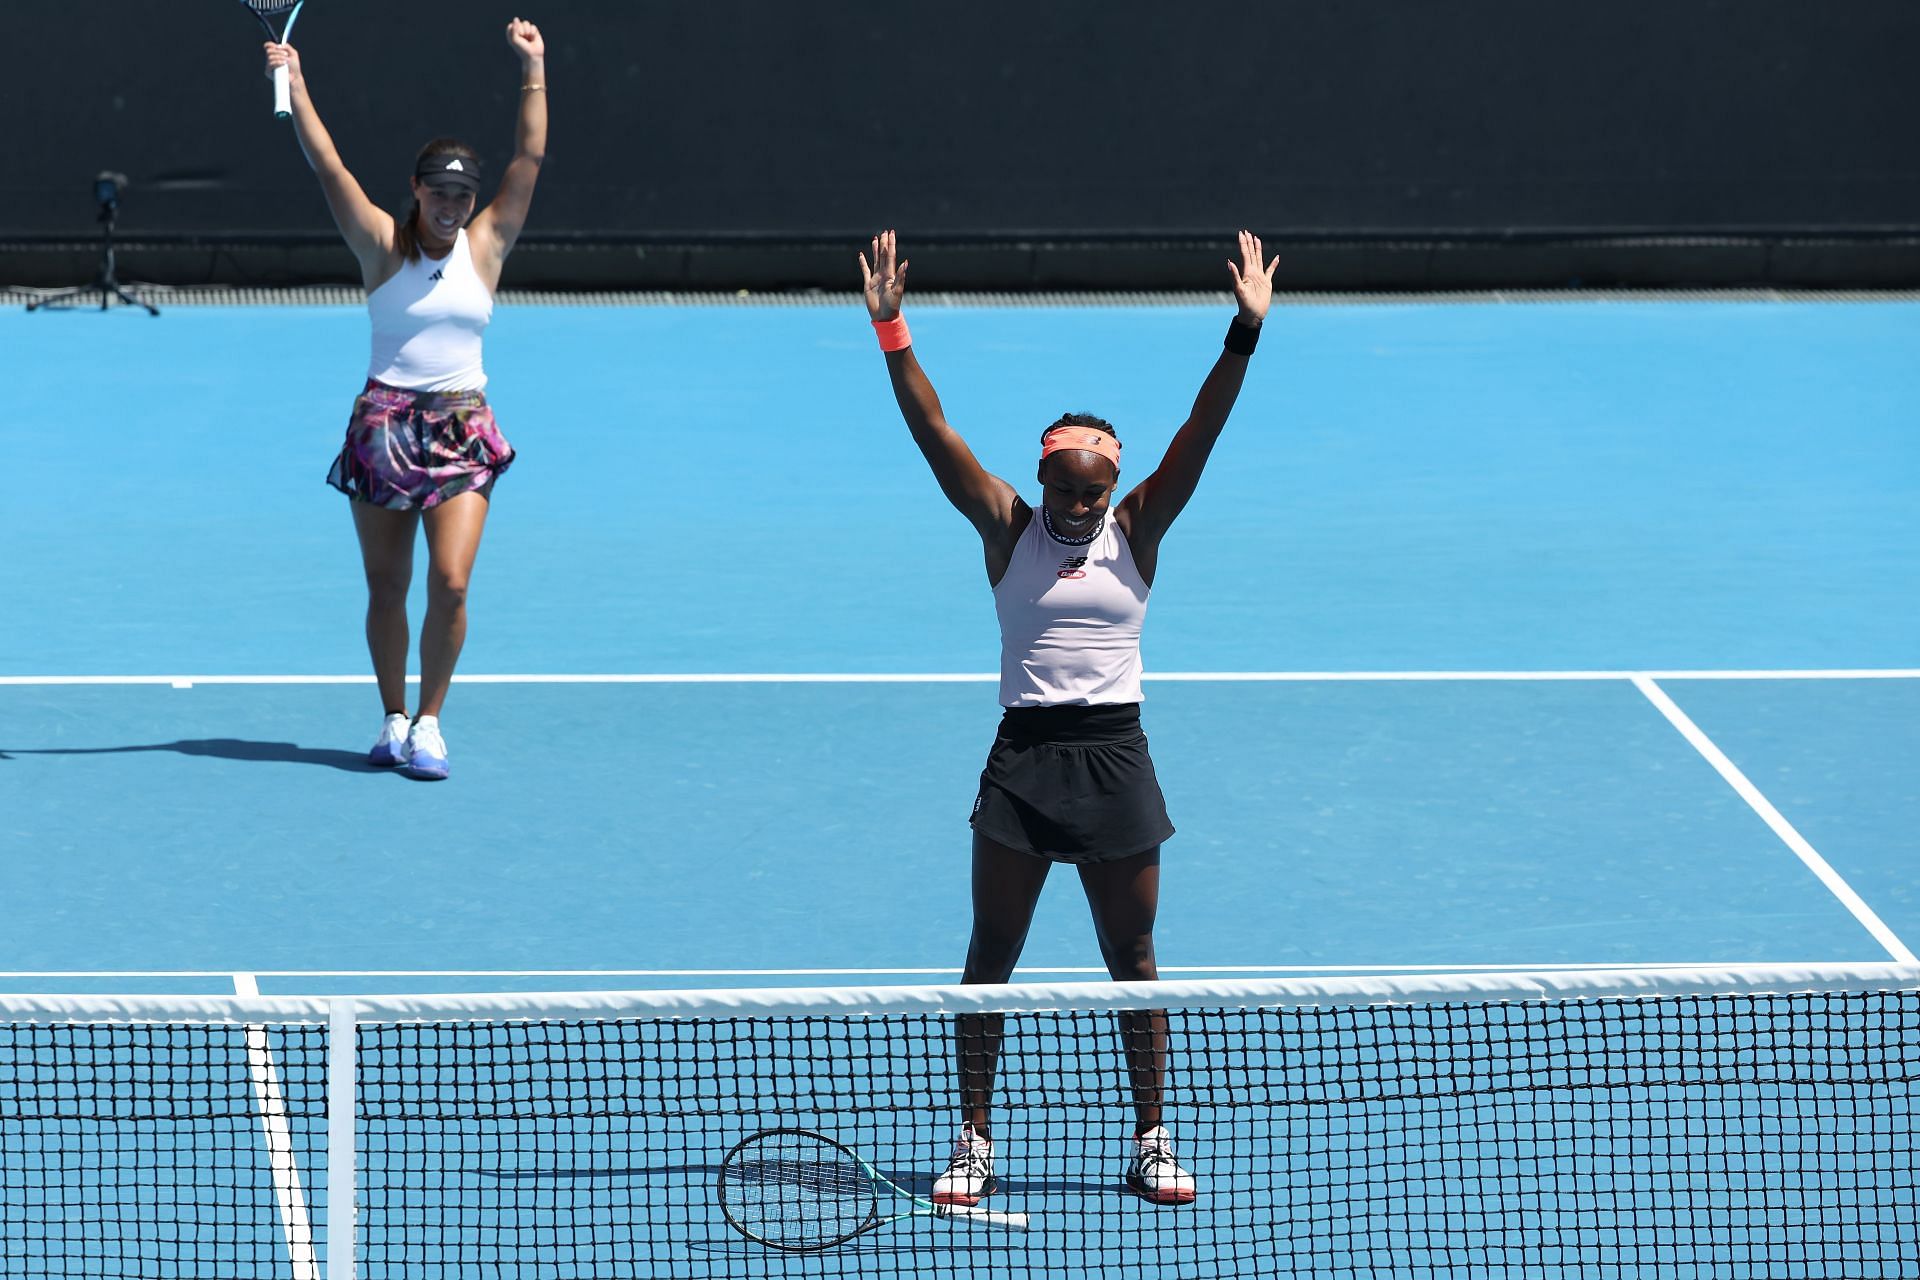 The pair celebrates their win at 2023 Australian Open